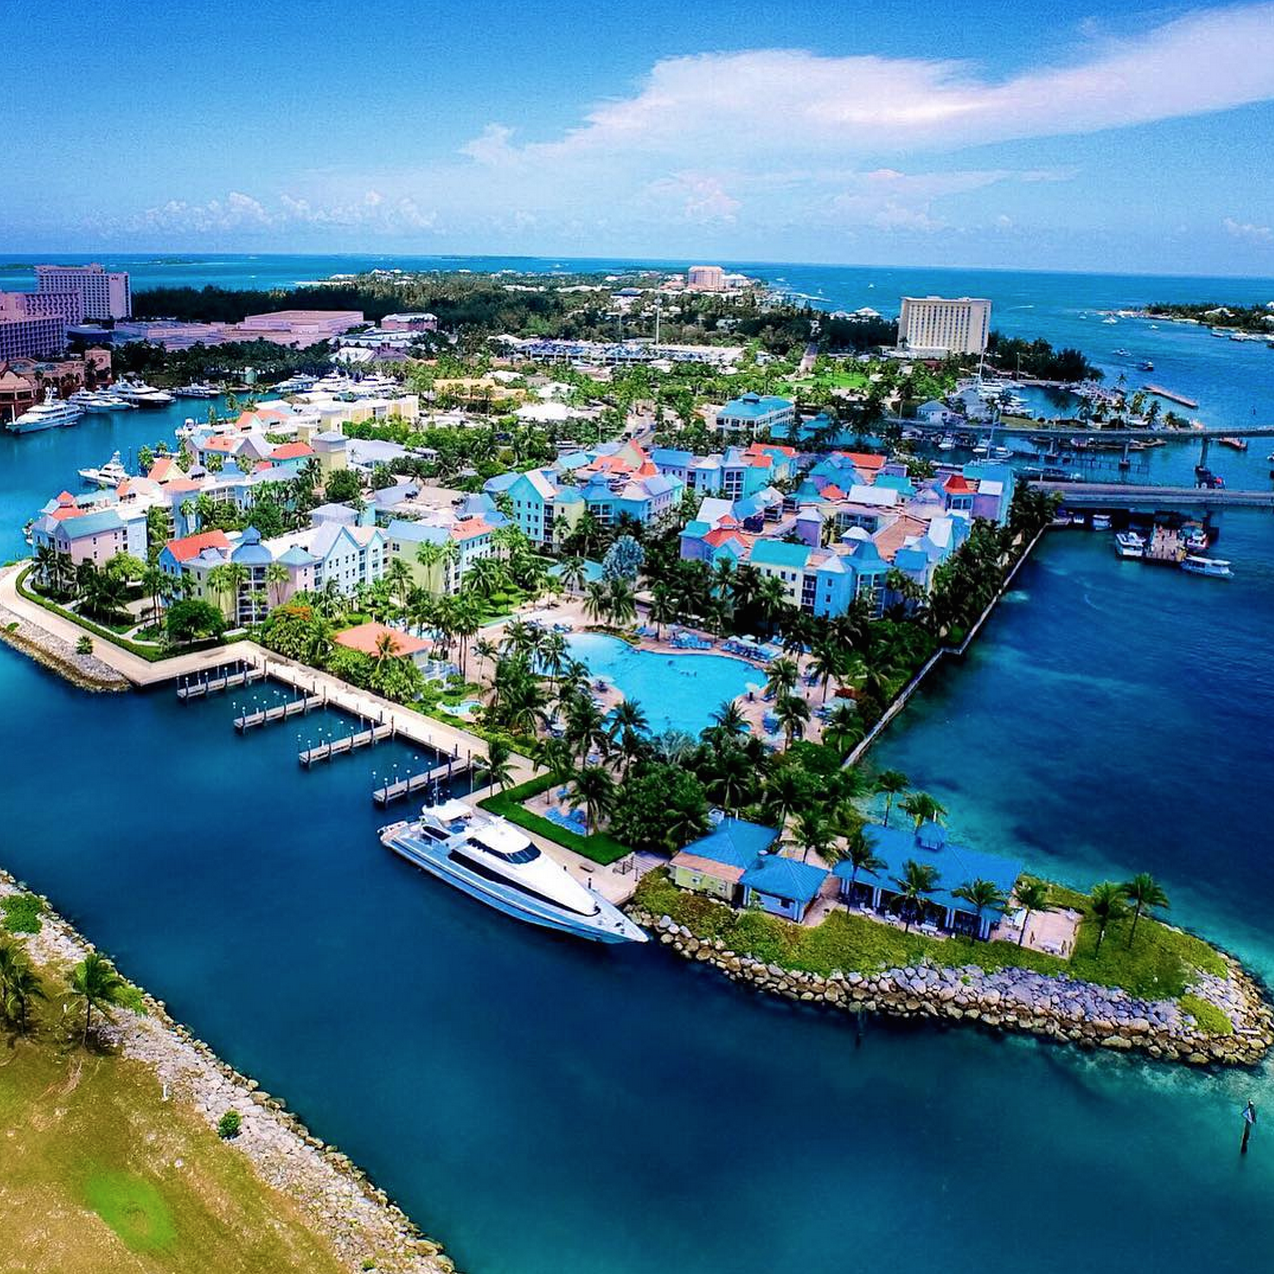 Bahamas islands. Остров Парадайз Багамские острова. Багамы Нассау. Парадайз Айленд Багамы. Багамские острова столица Нассау.